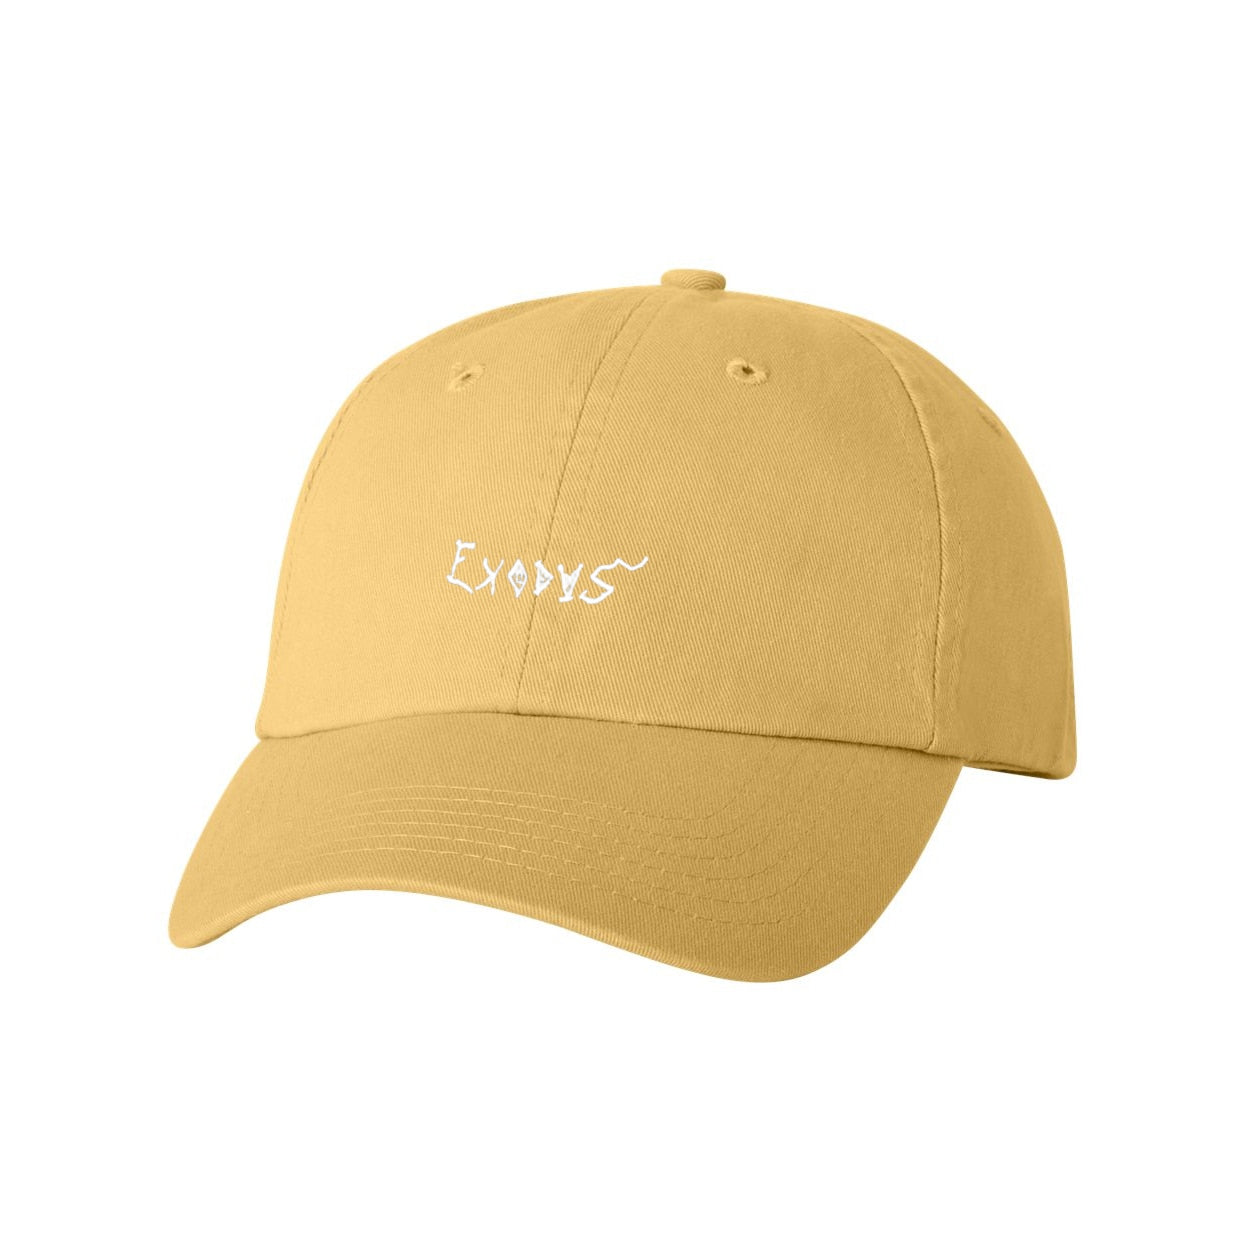 Exodus Anoixi Adjustable Dad Hat - Light Yellow